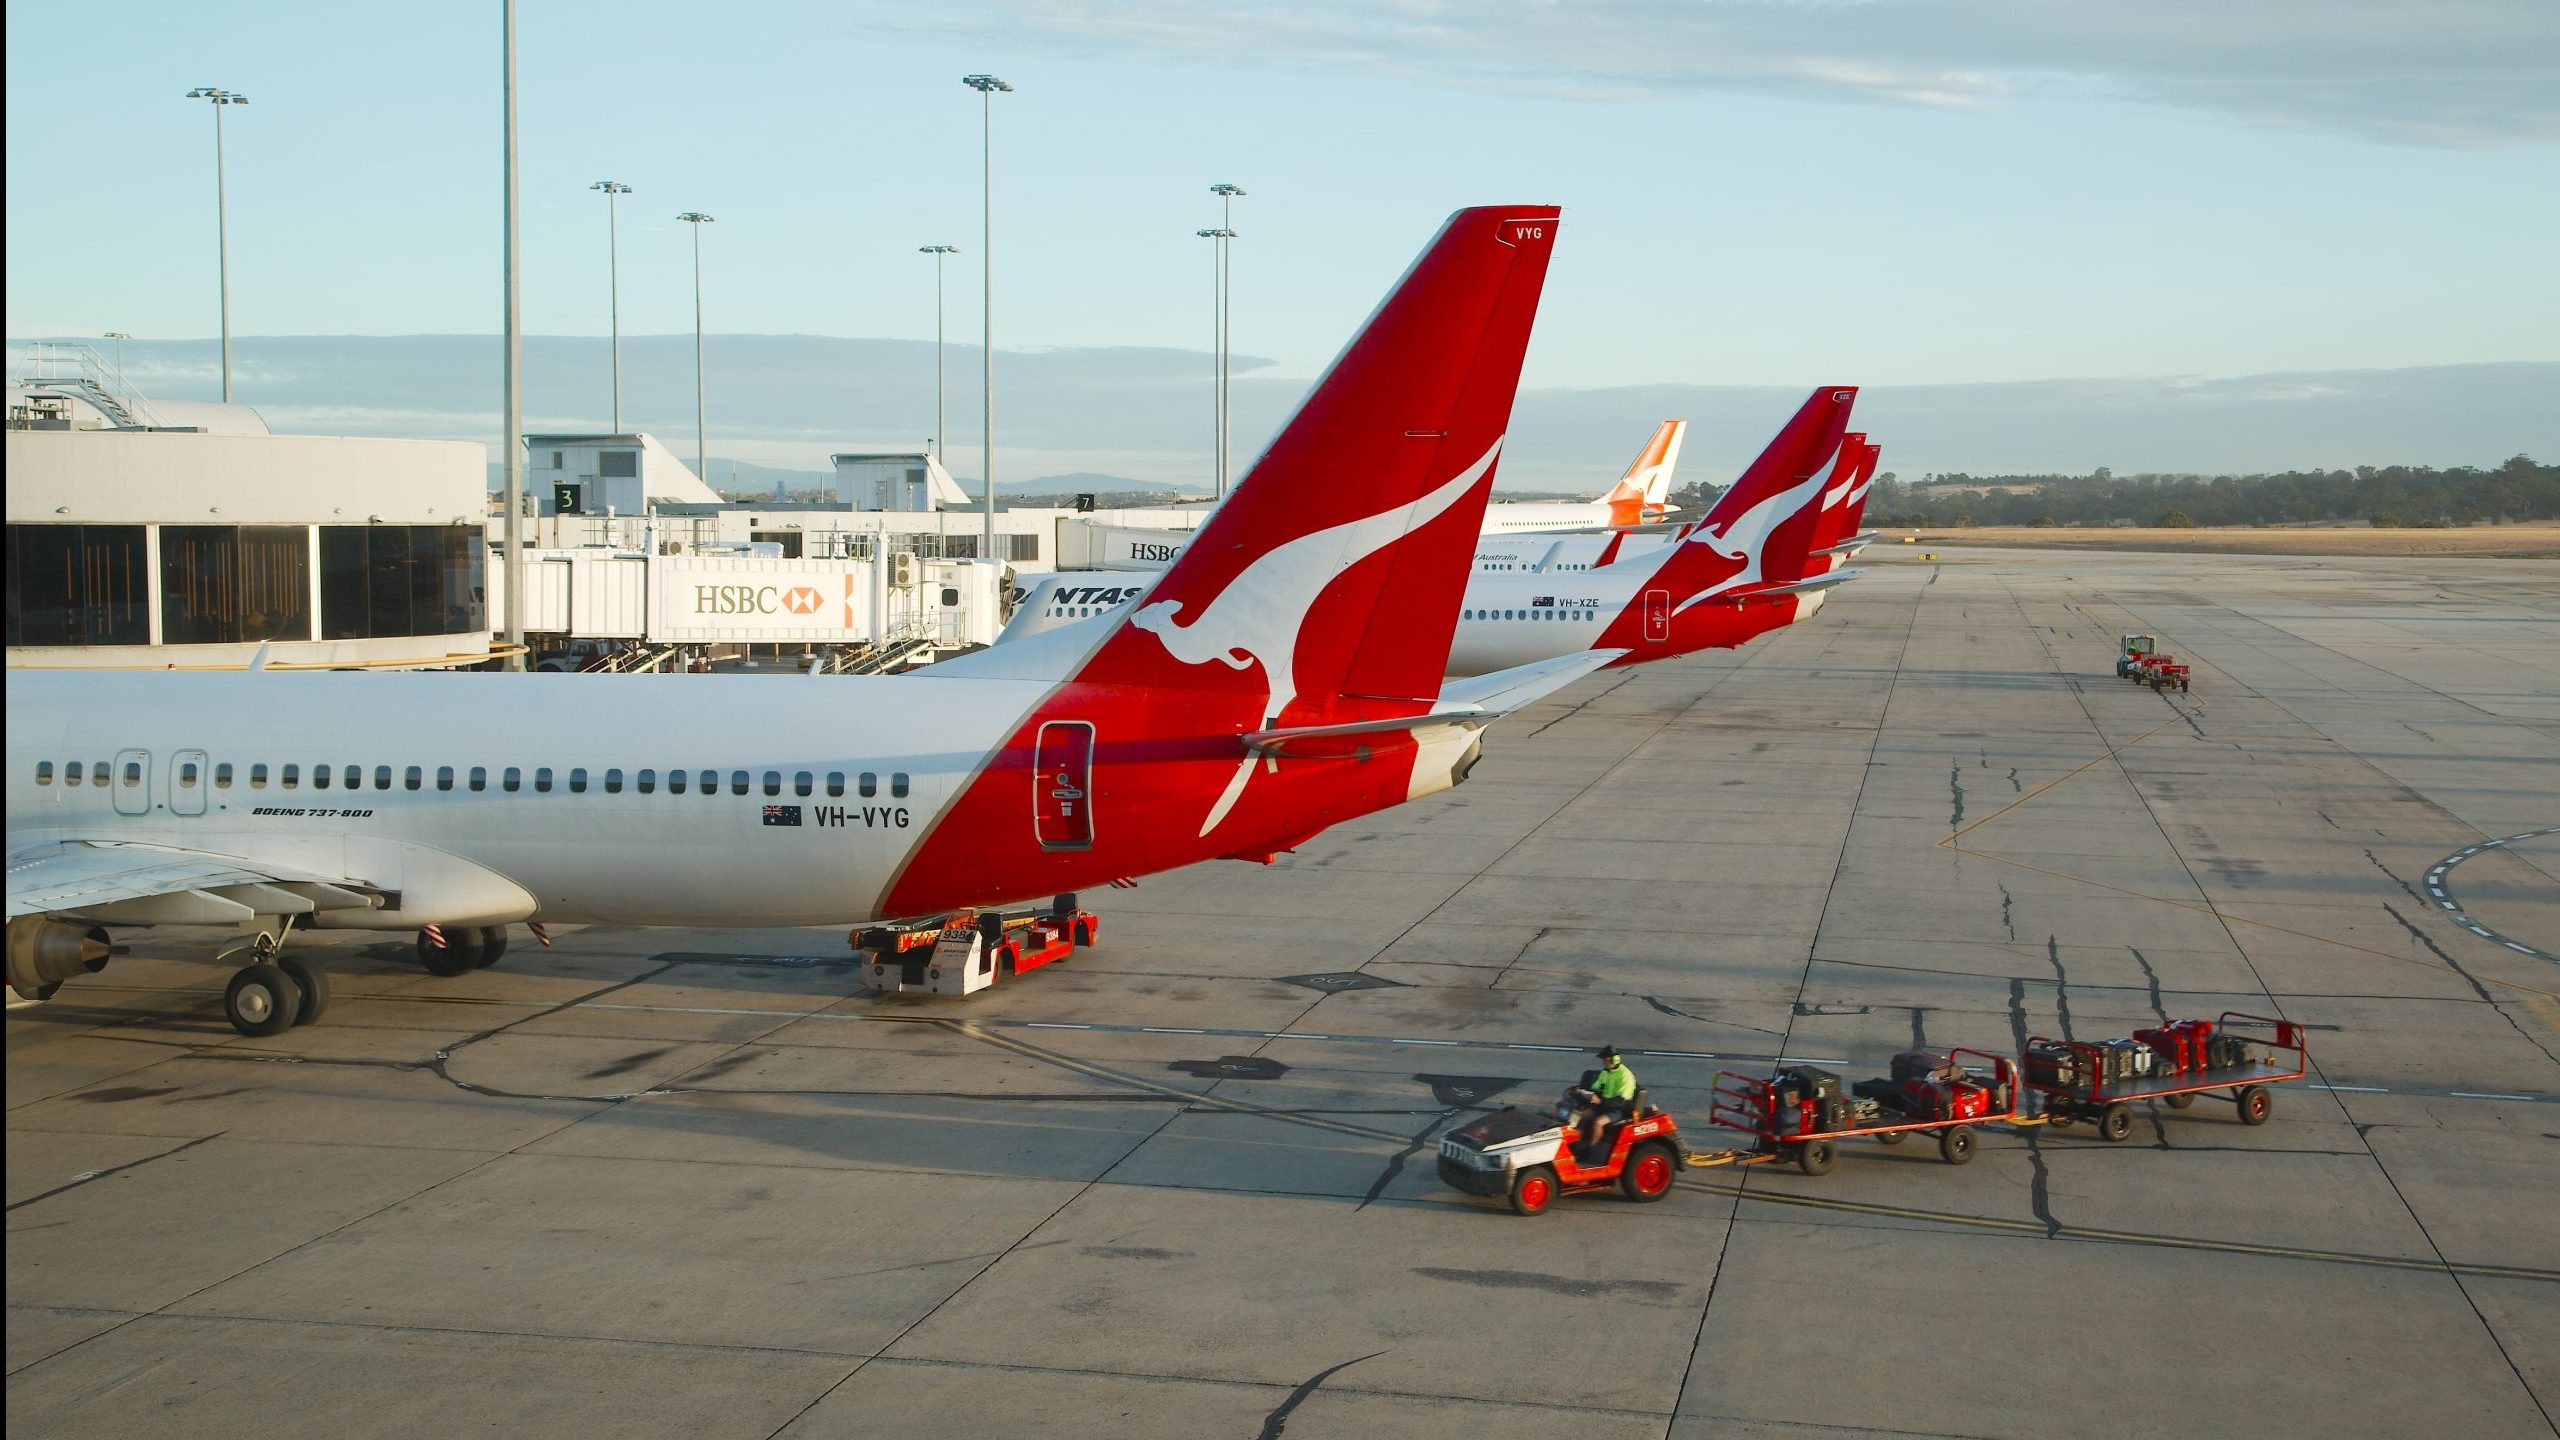 Luggage handlers approach Qantas airplanes